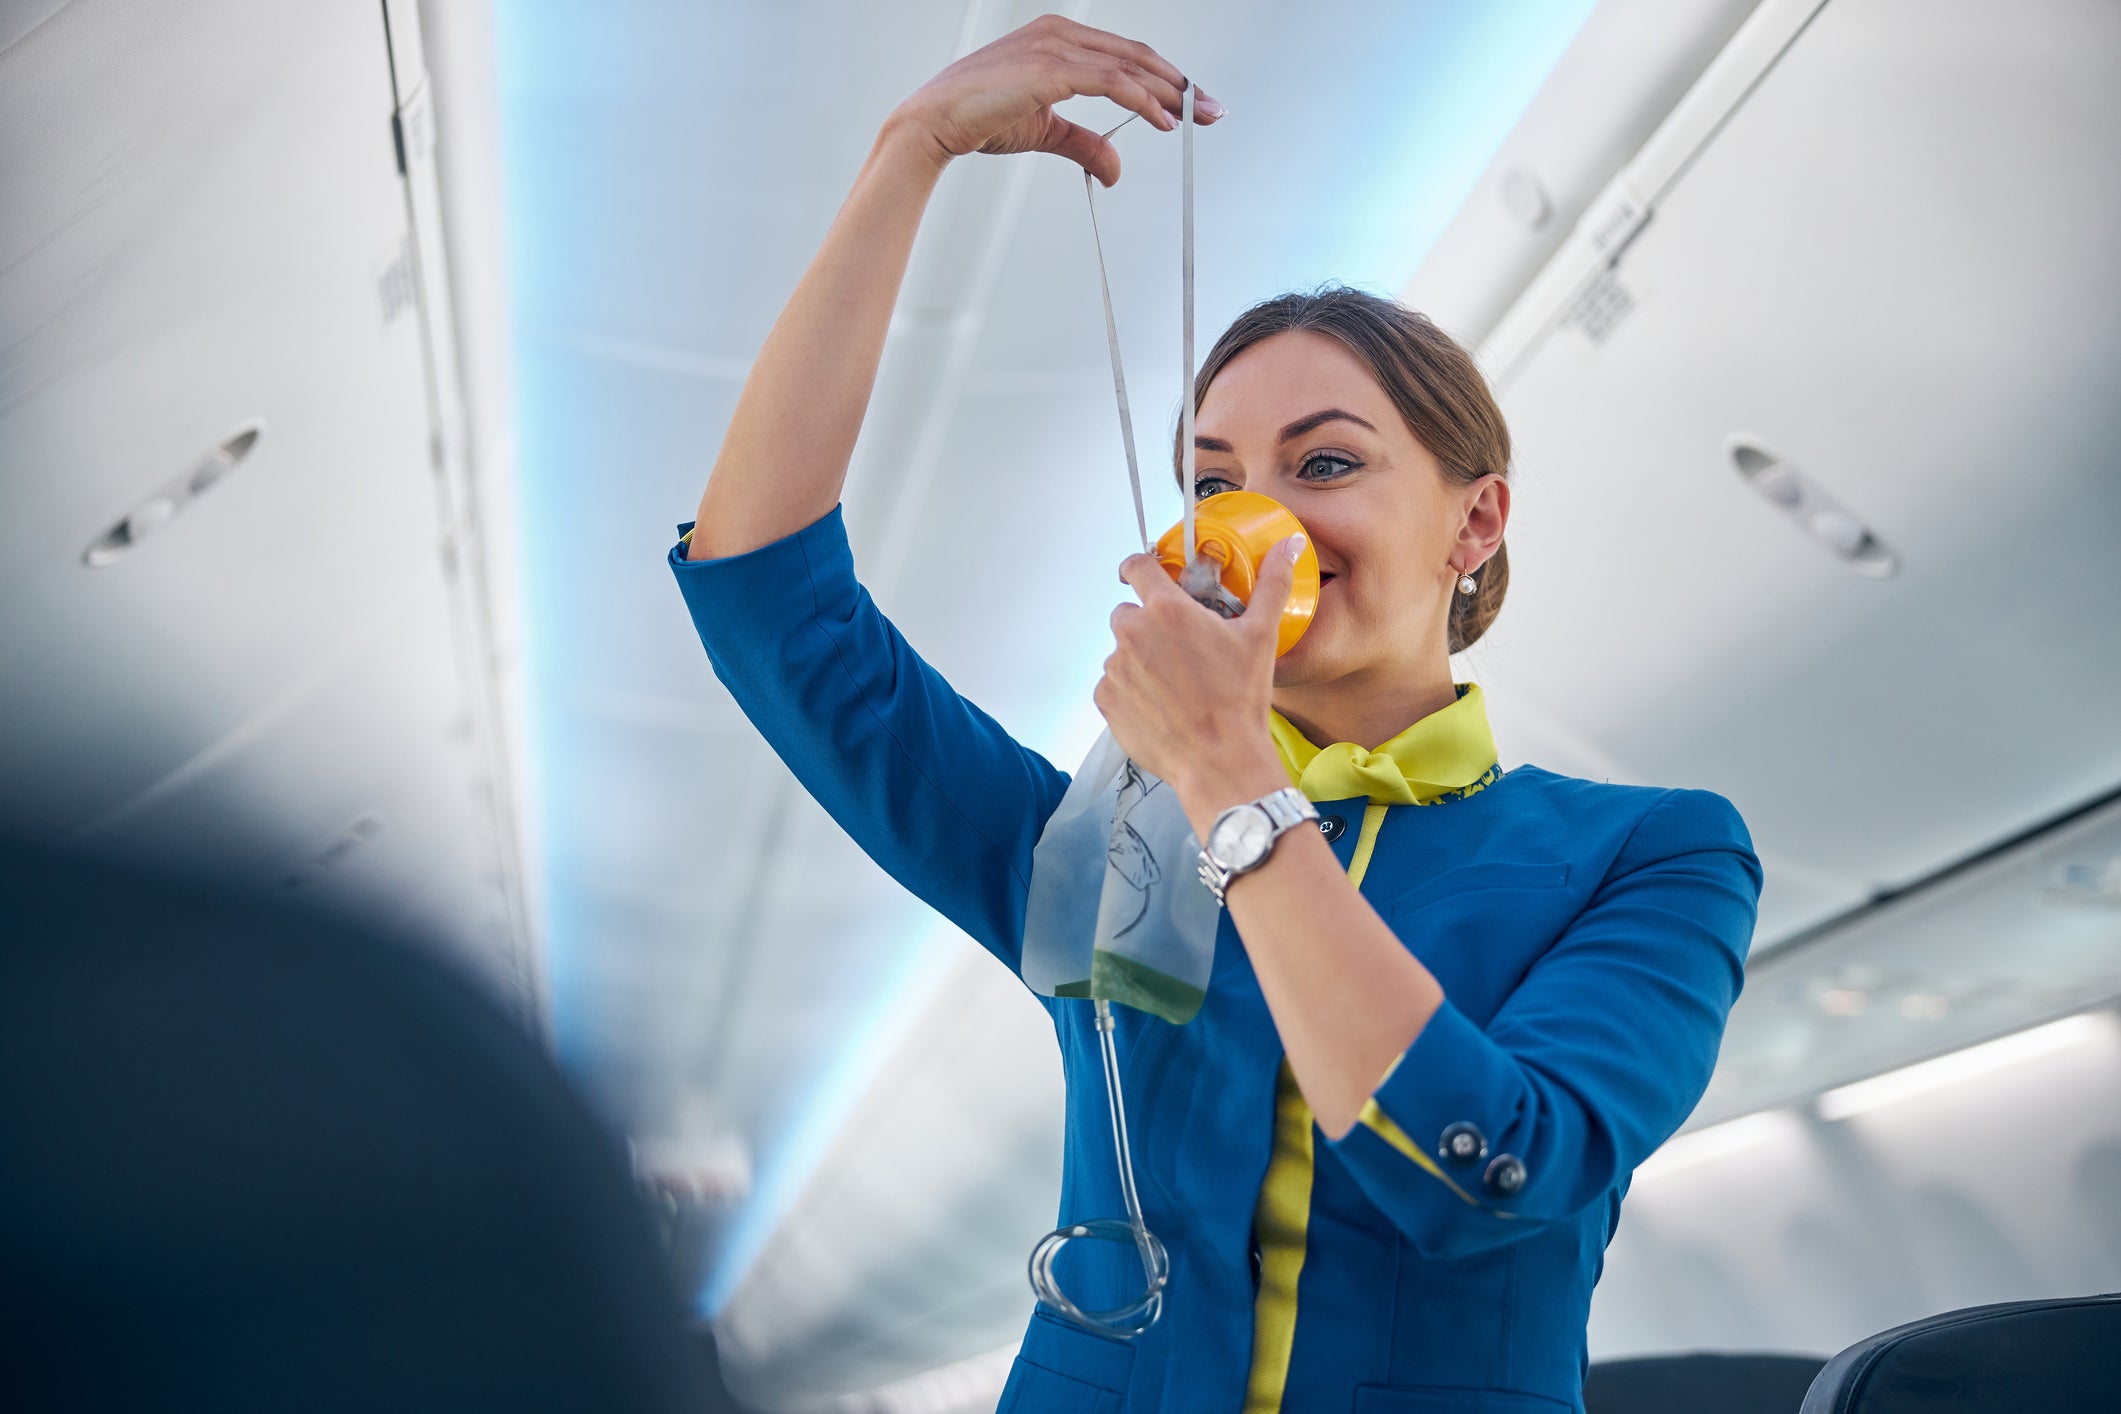 An air steward ‘dances’ onboard a commercial flight